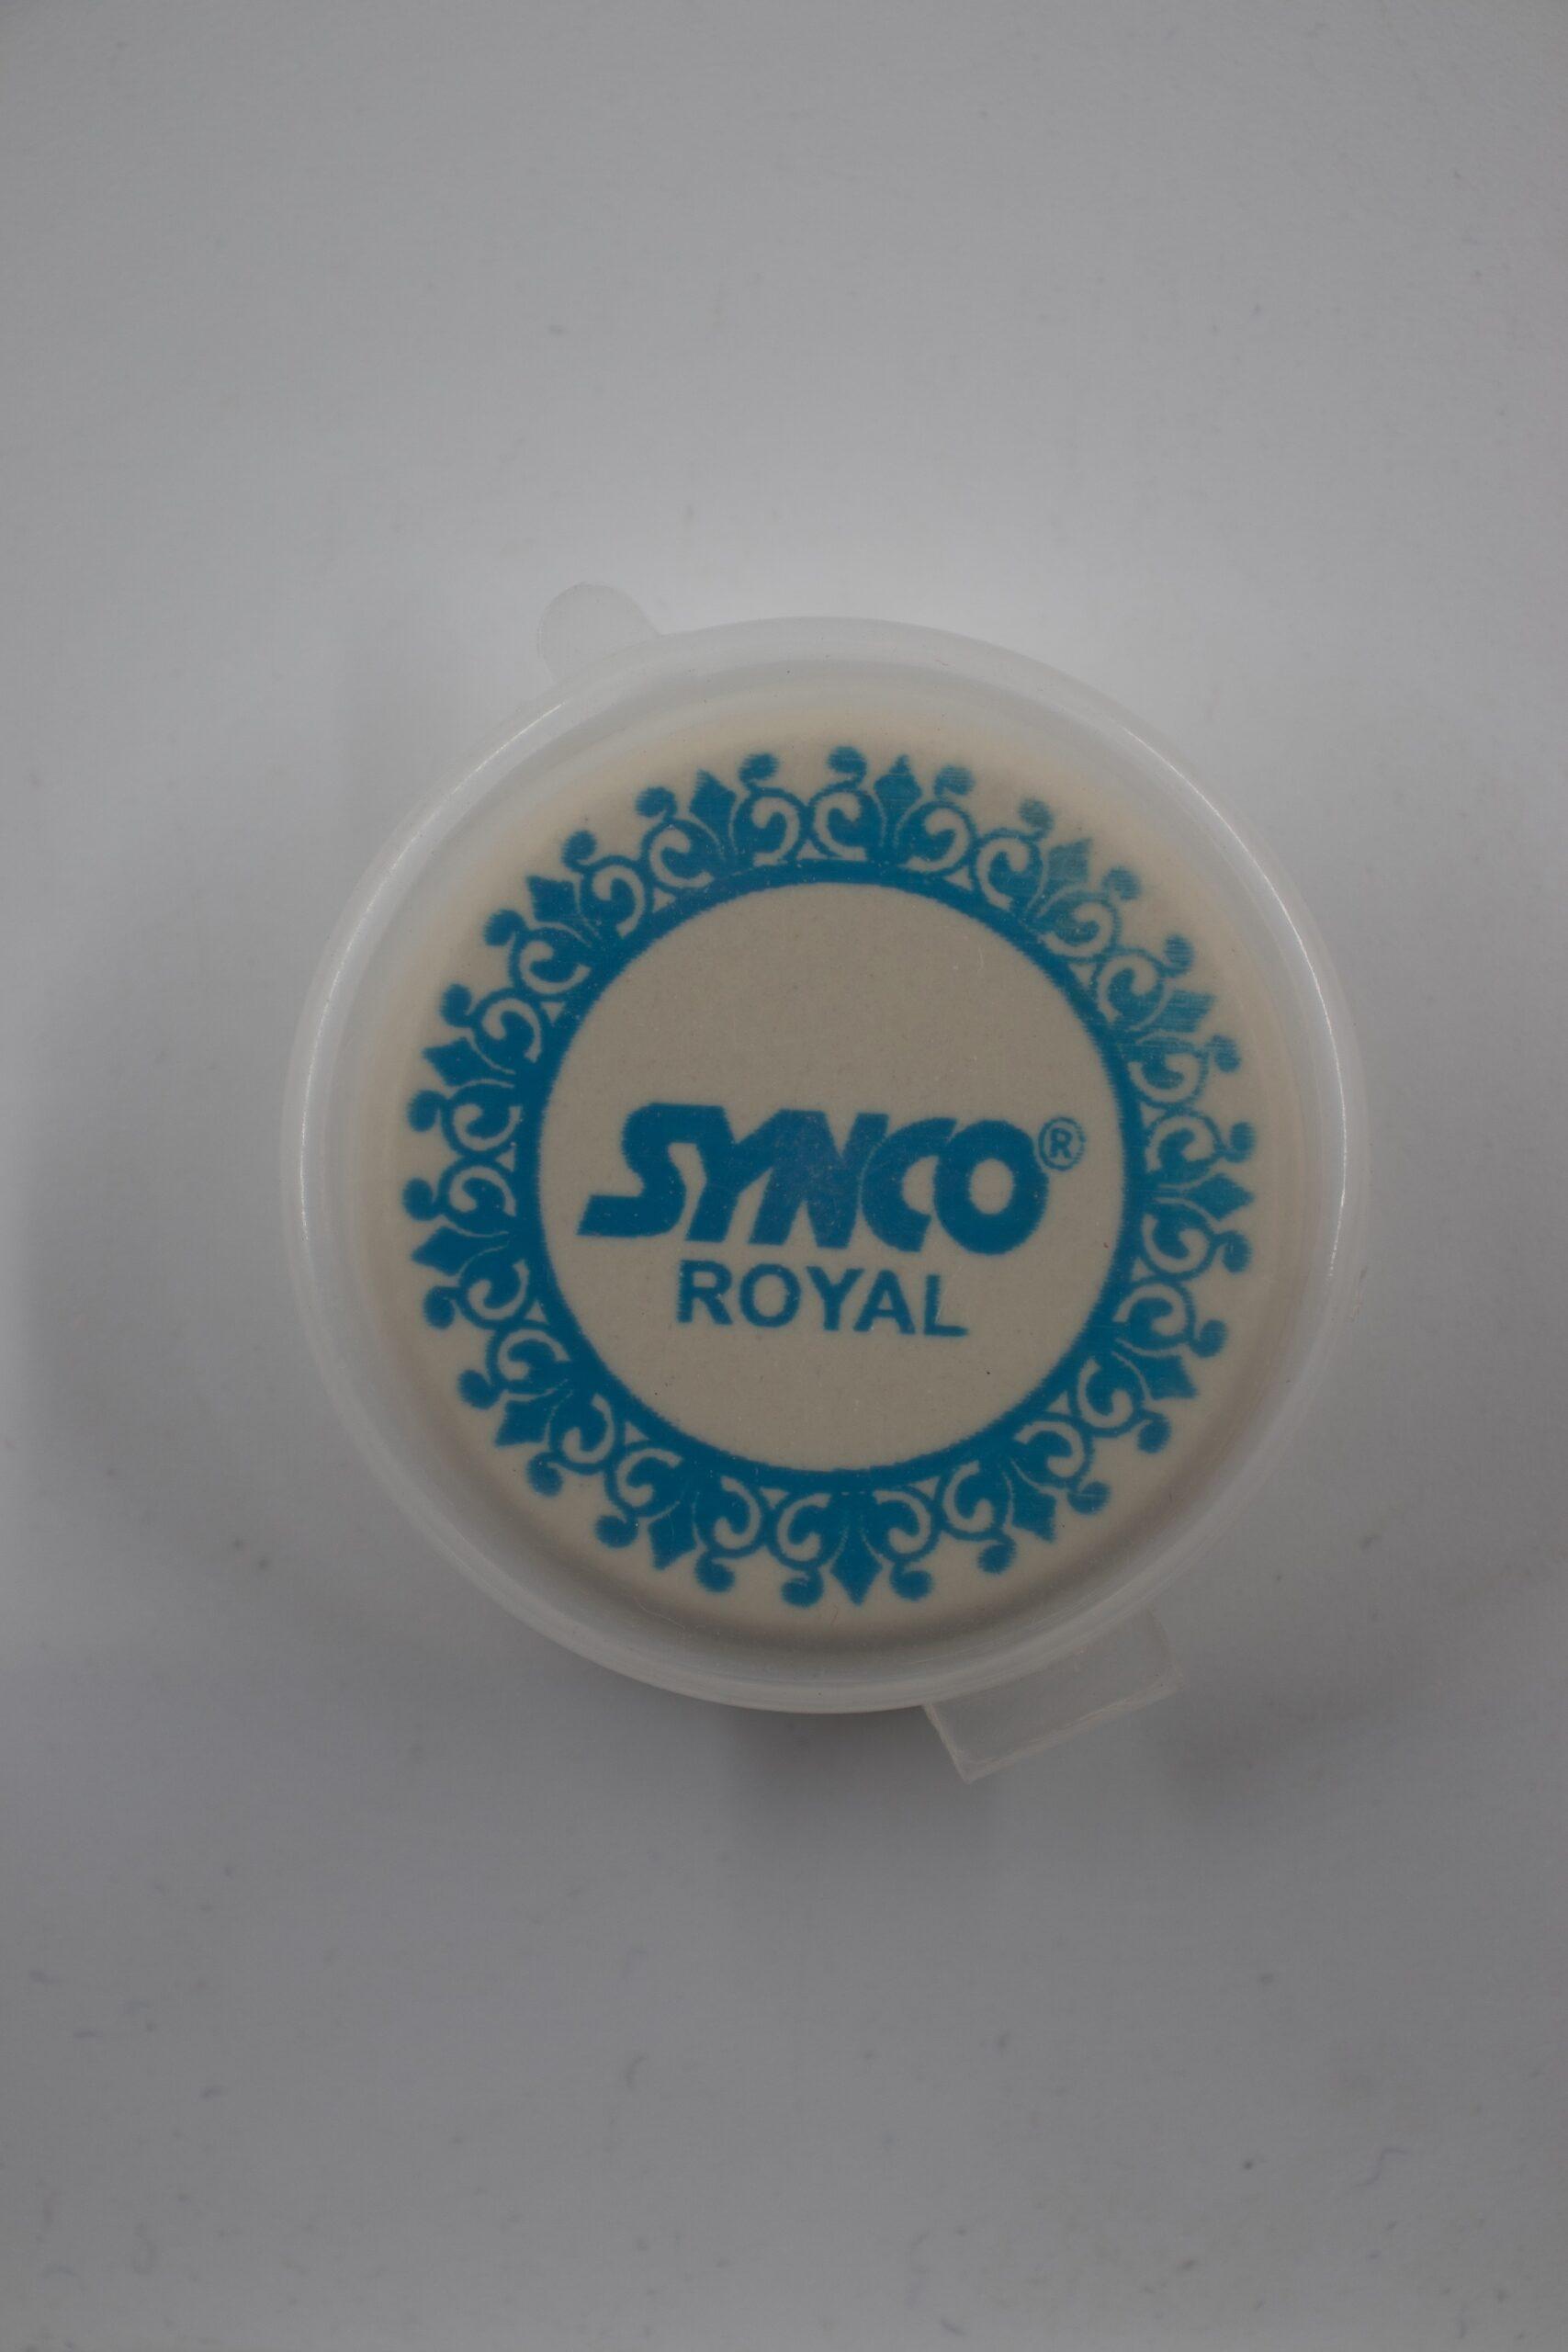 Synco Royal Carrom Striker professional 15 gram, Assorted - 1